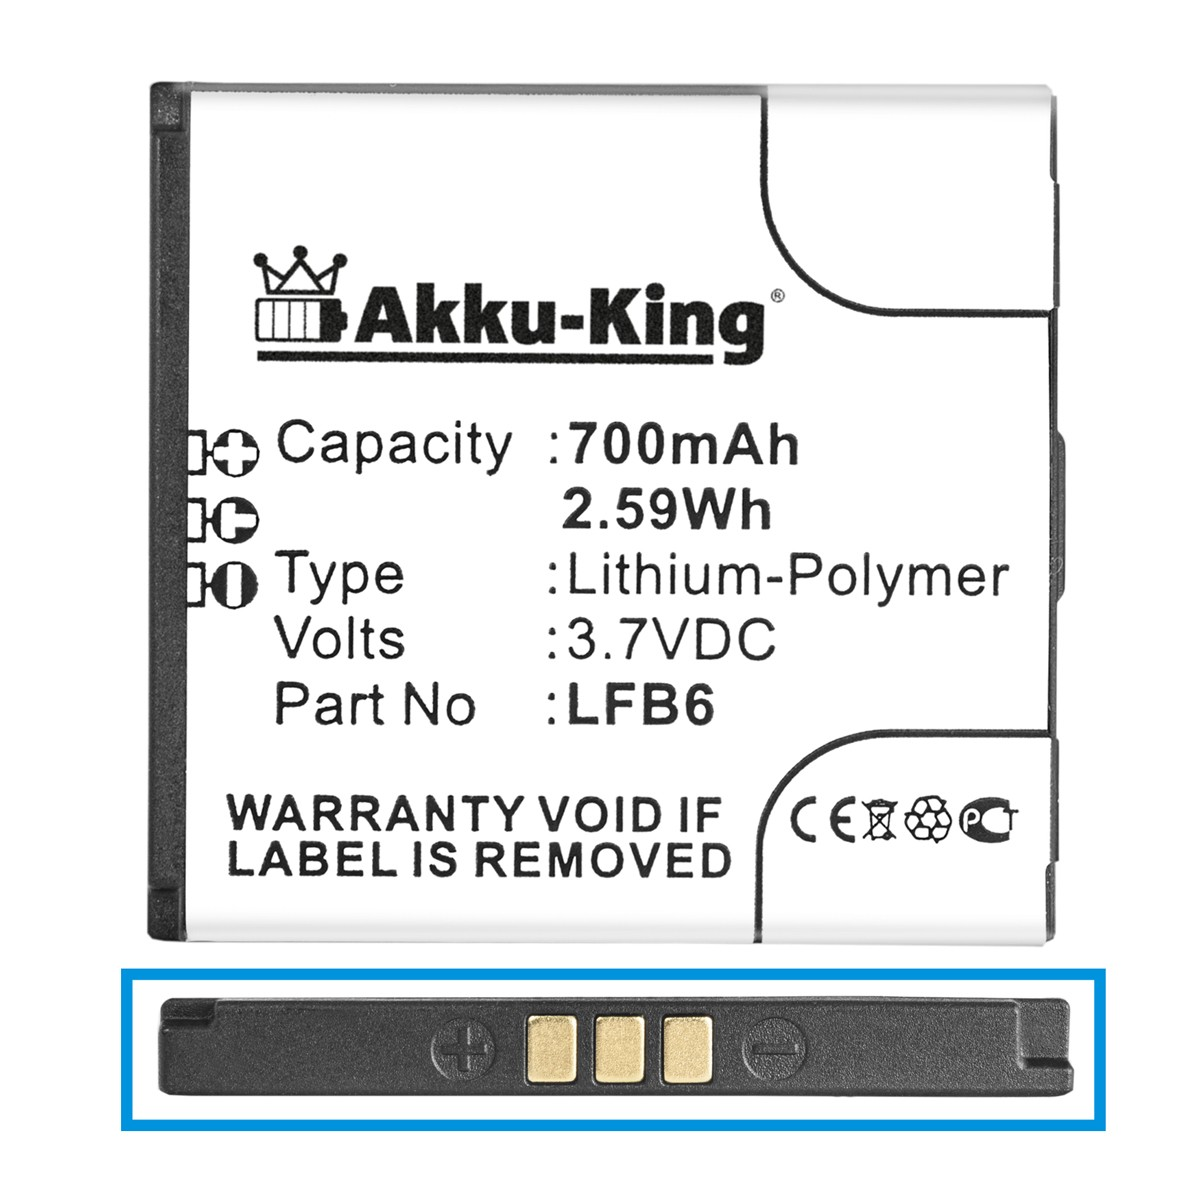 AKKU-KING Akku kompatibel Handy-Akku, Li-Ion LFB6 700mAh 3.7 Volt, mit Kazam